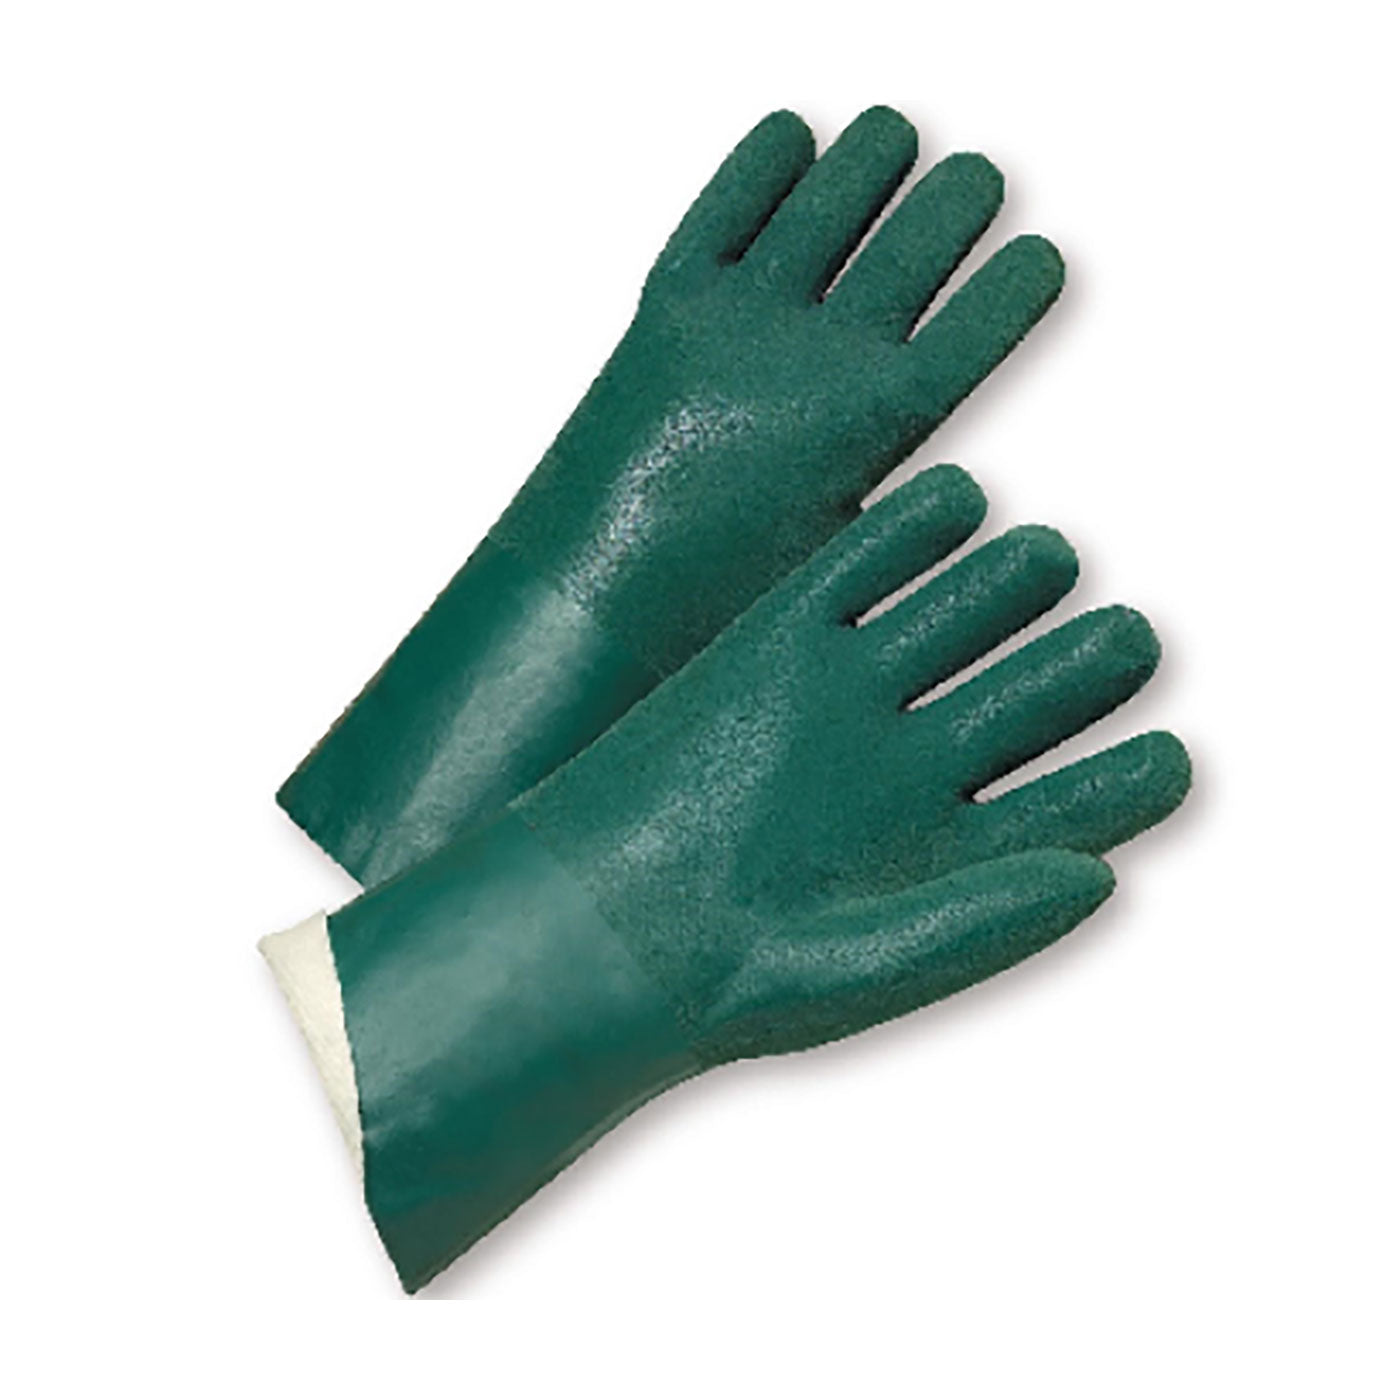 Pip 14 Rough Pvc Glove Green